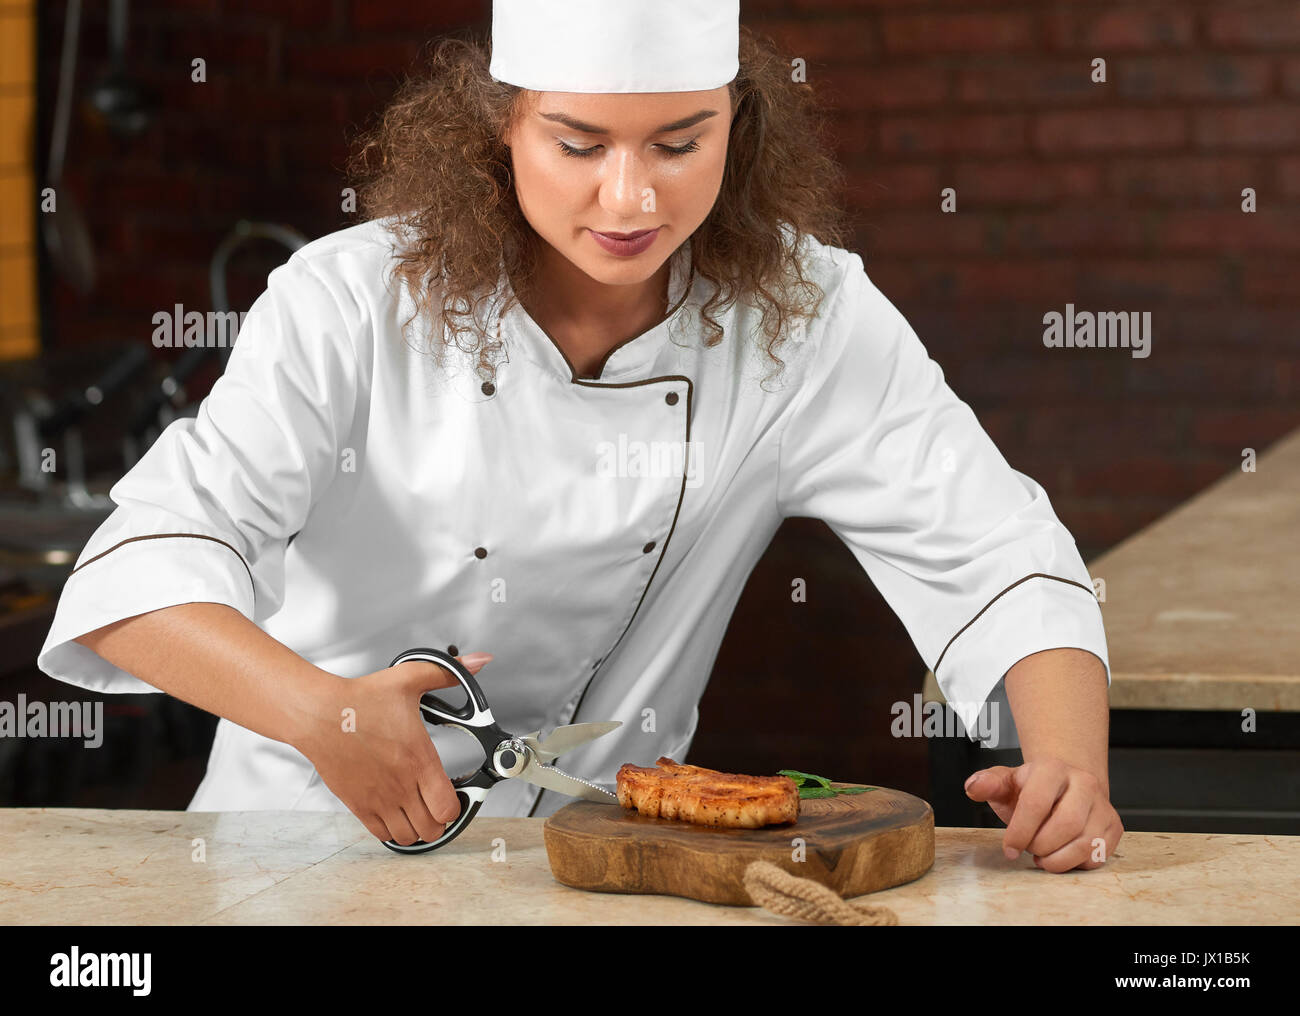 https://c8.alamy.com/compes/jx1b5k/chef-profesional-de-corte-con-tijeras-de-pollo-jx1b5k.jpg